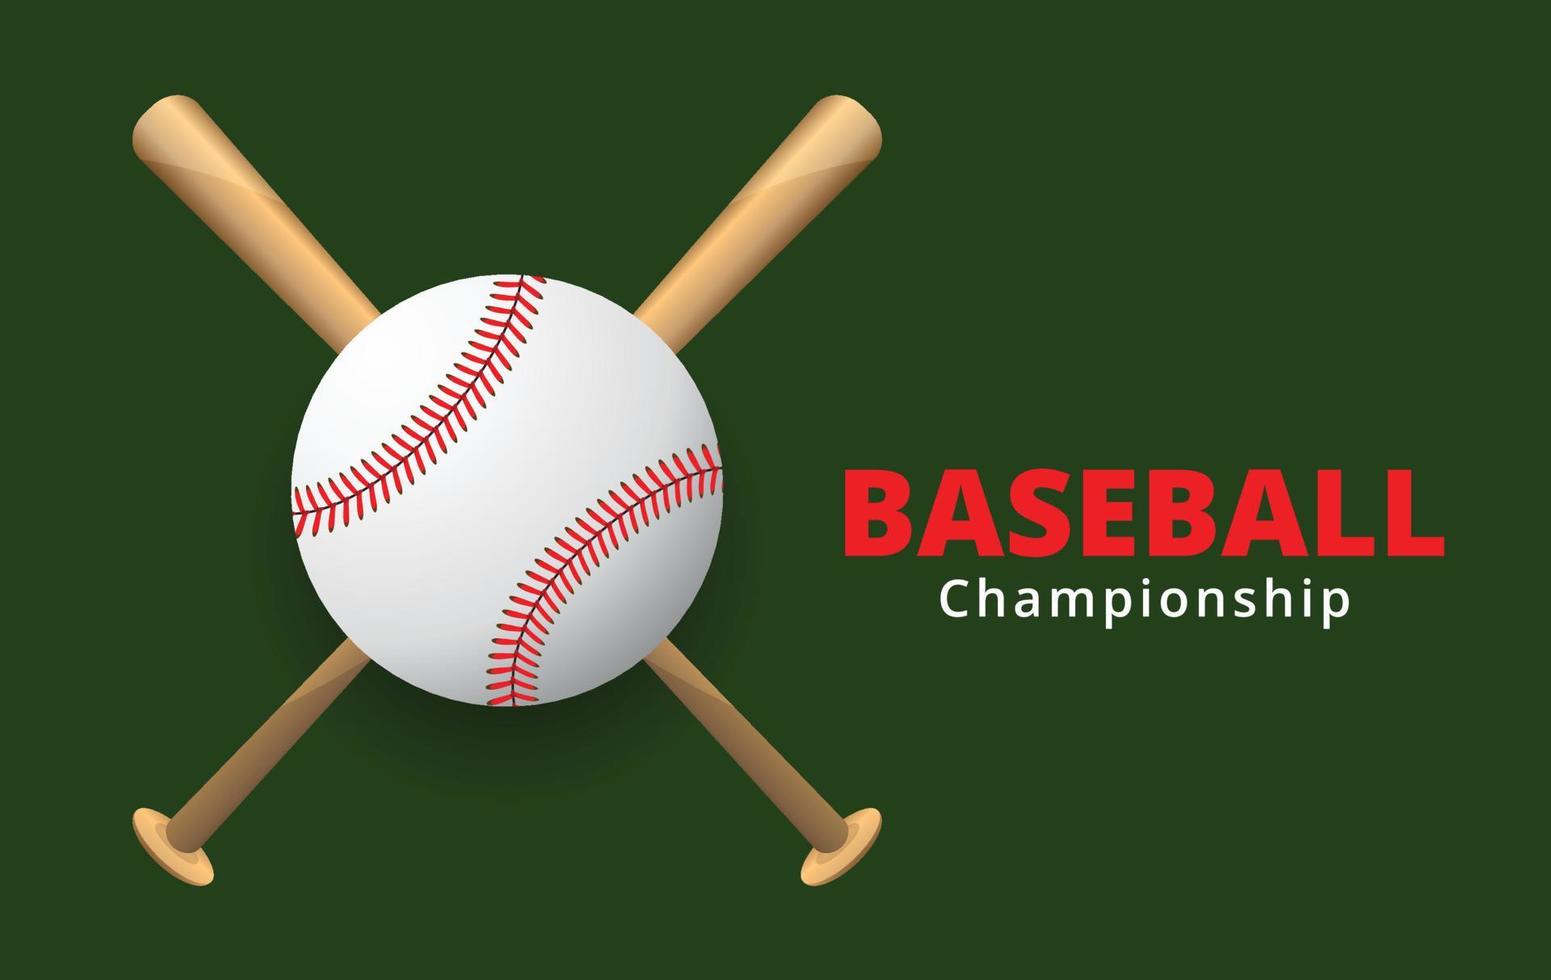 Baseball und Baseballschläger auf grünem Hintergrund, Sportspiel, Vektorillustration. vektor